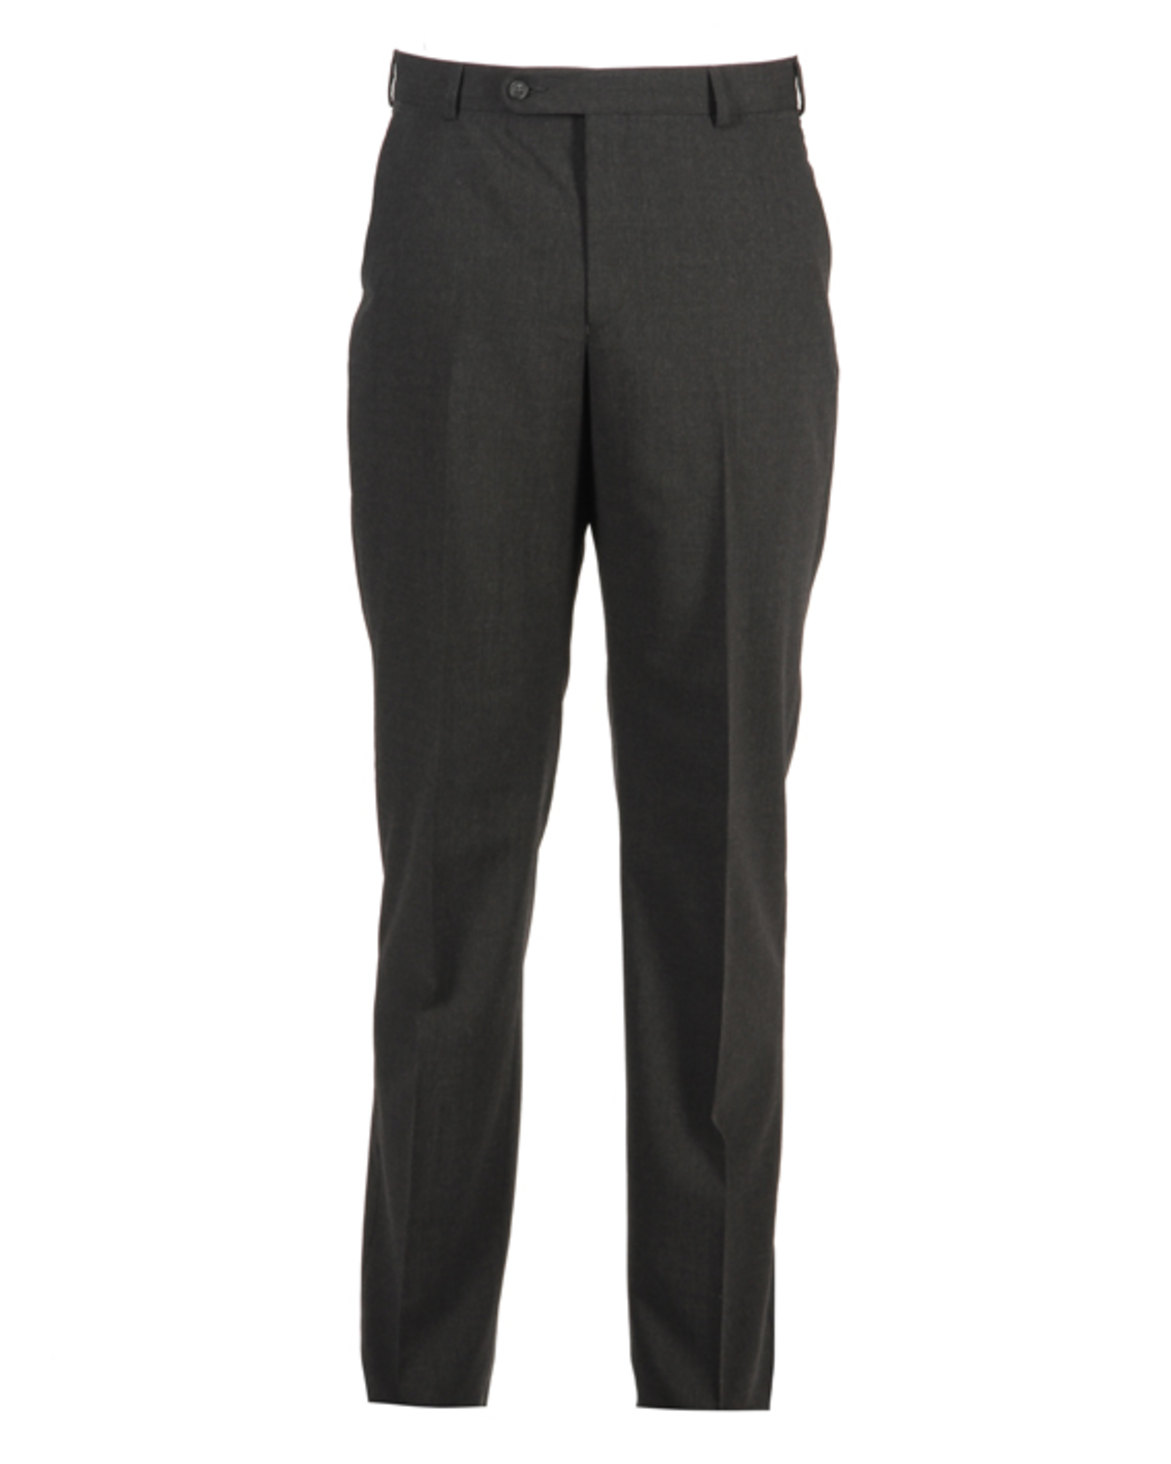 Carducci Formal Trousers Charcoal Grey | Zando